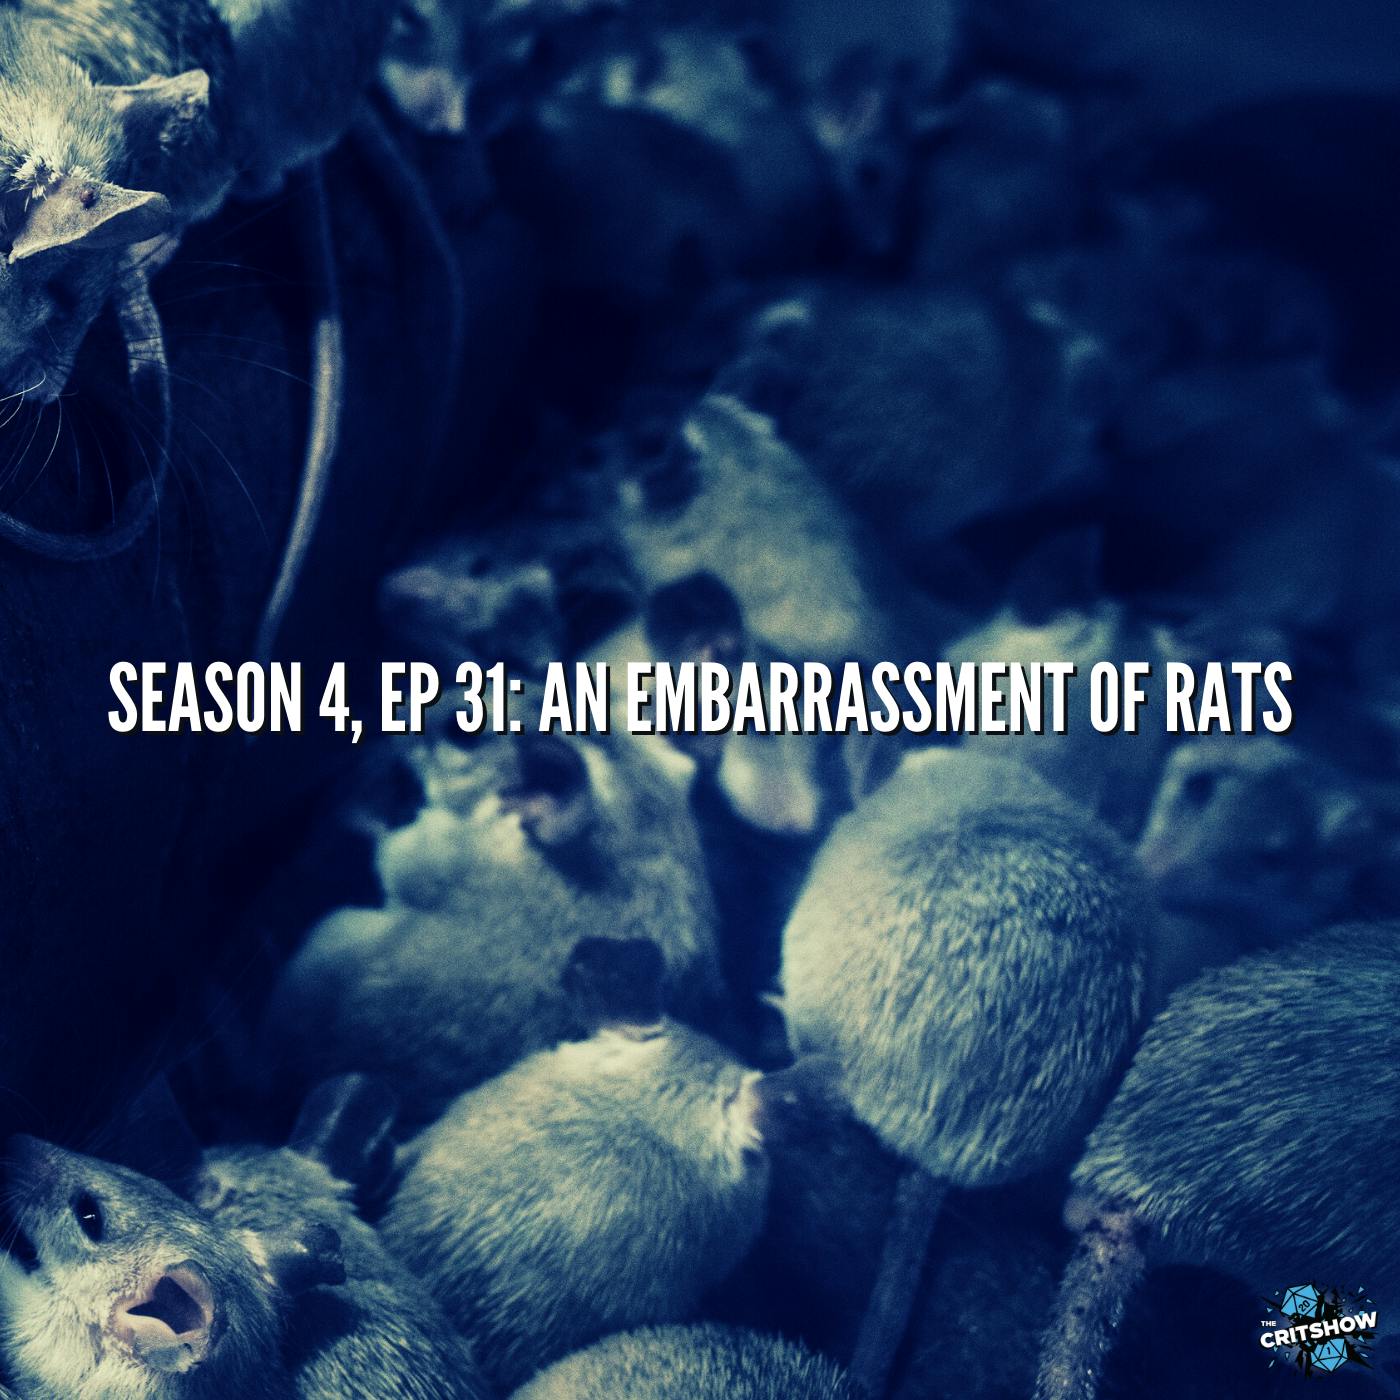 An Embarrassment of Rats (S4, E31)